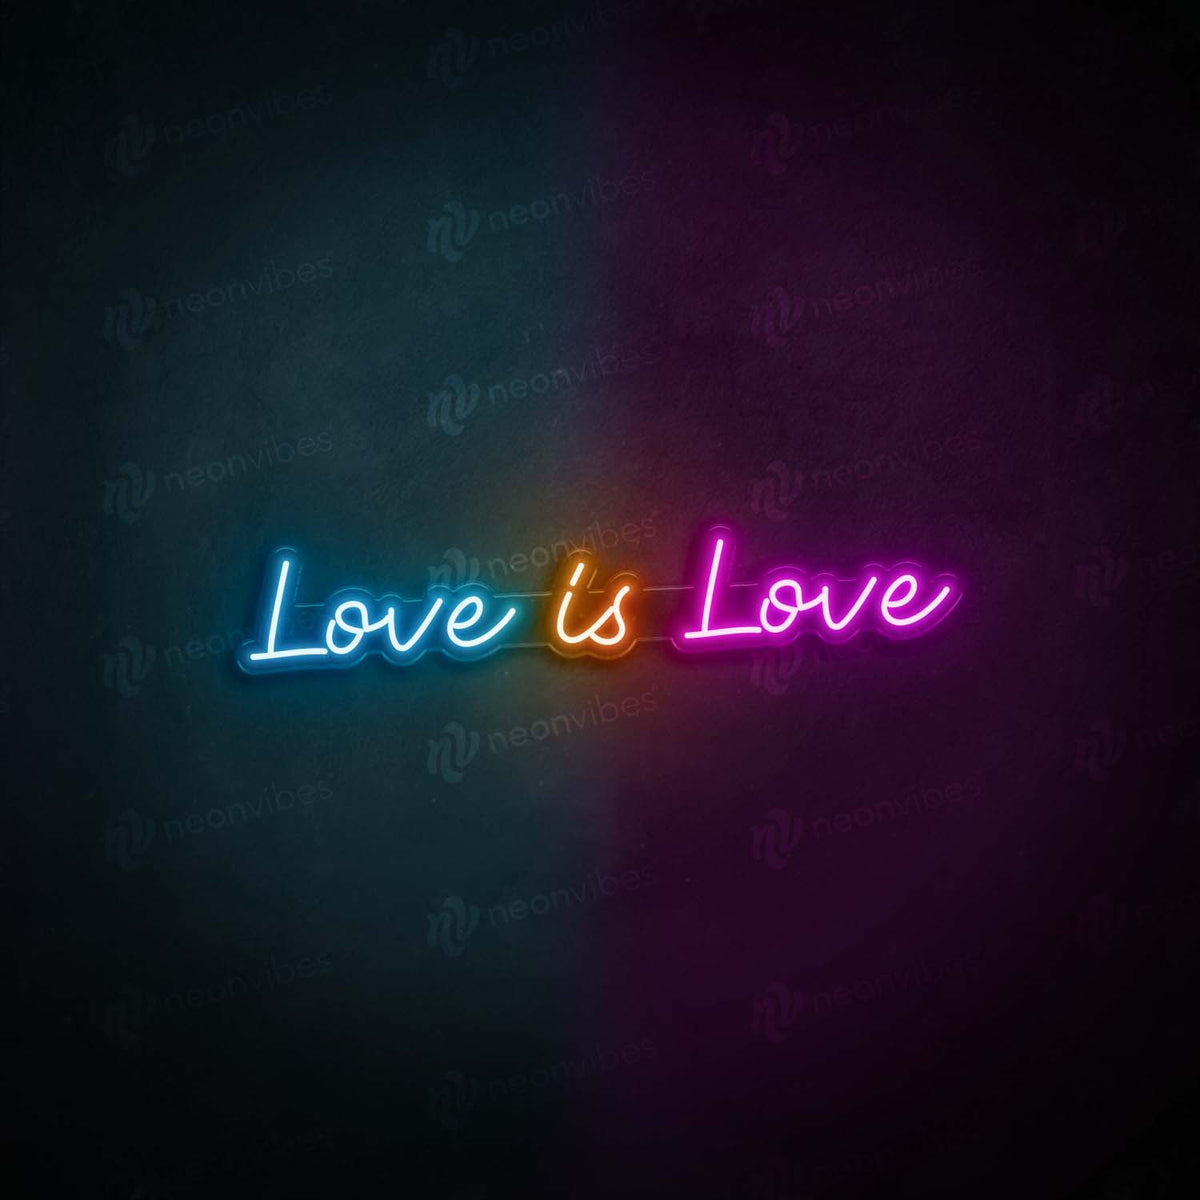 Love is love neon sign